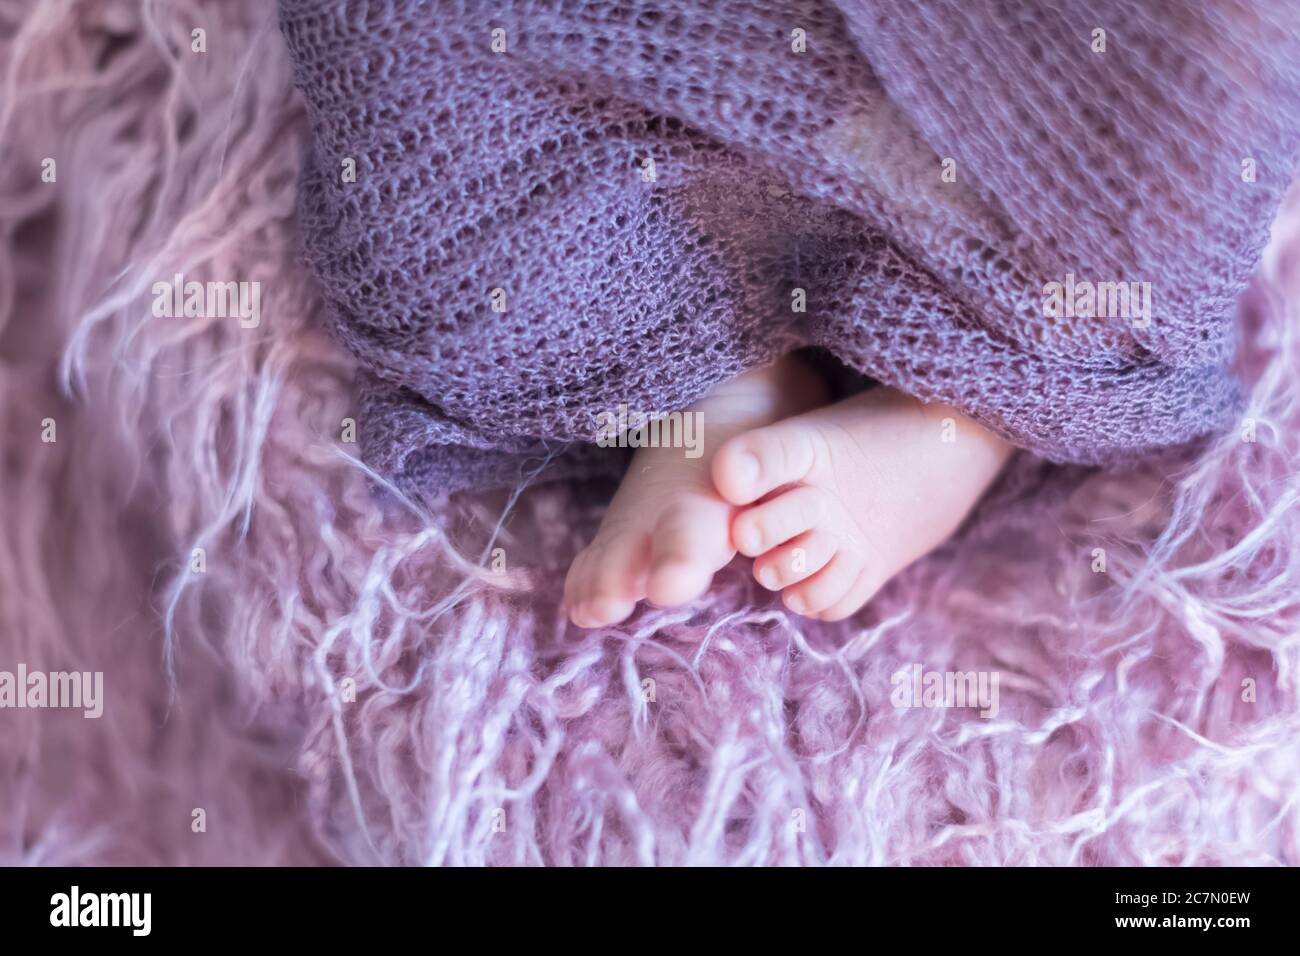 Baby feet swaddled in purple fabrics Stock Photo